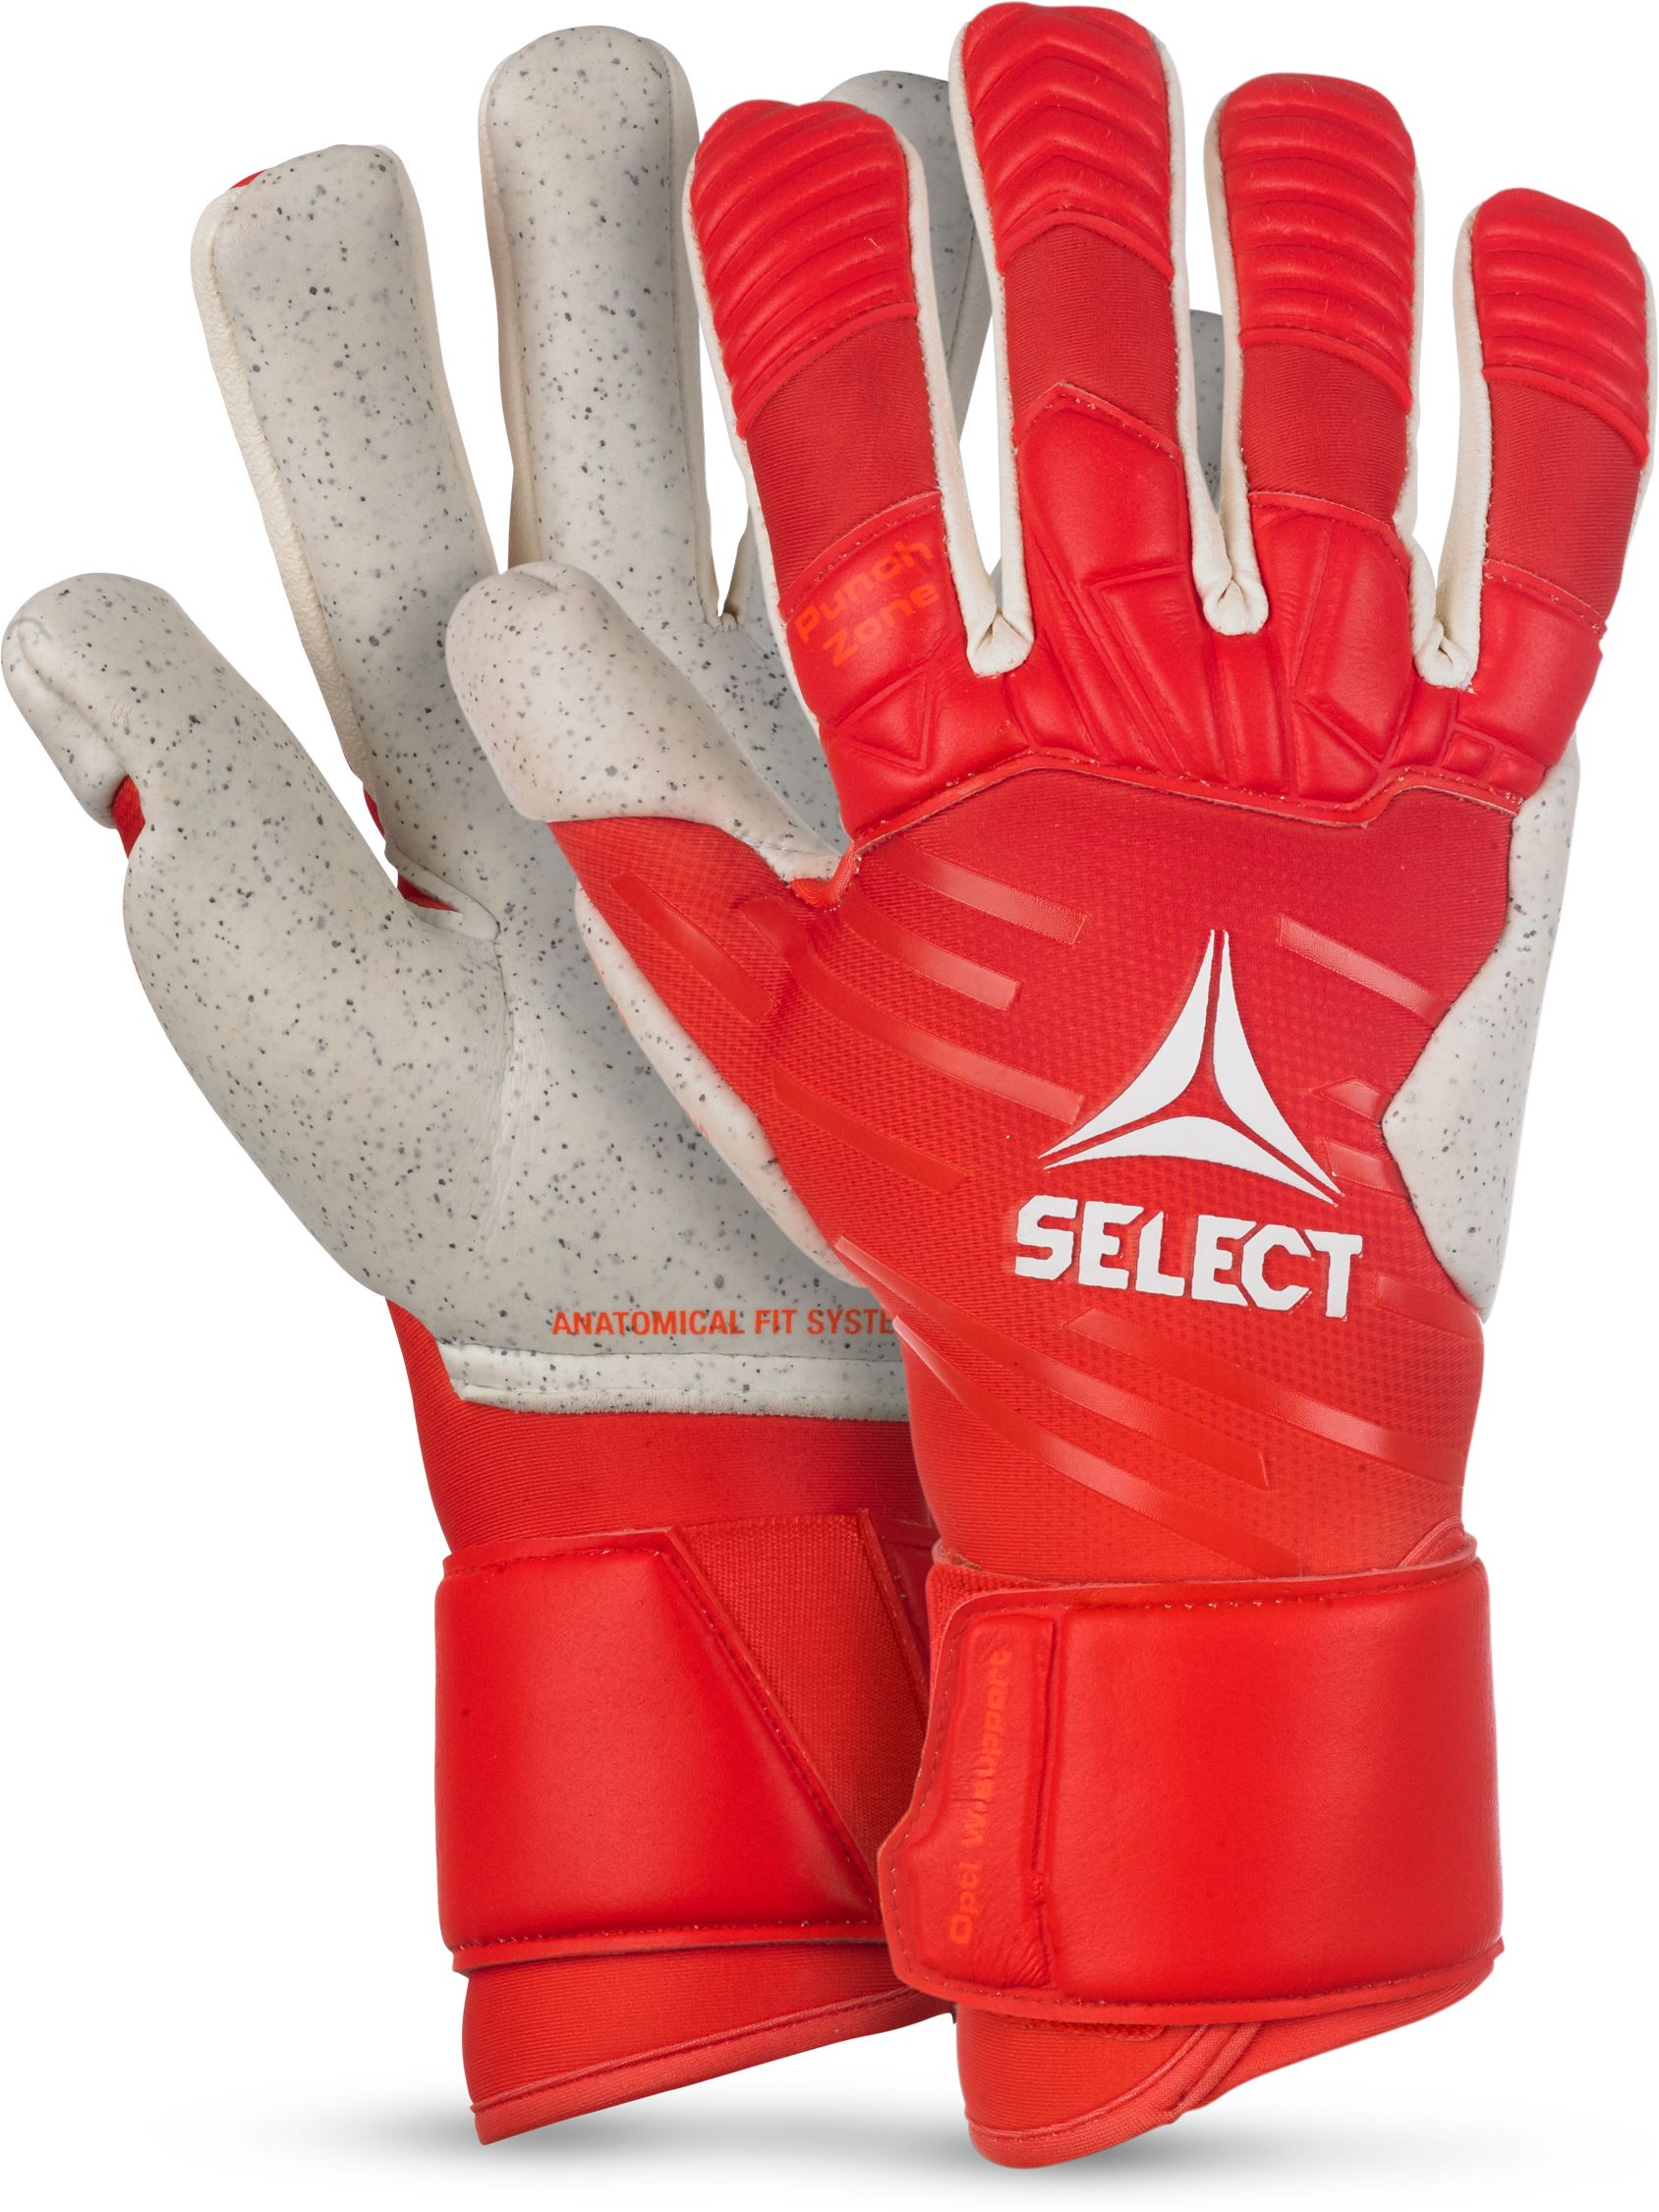 SELECT, GK gloves 88 Pro Grip v23